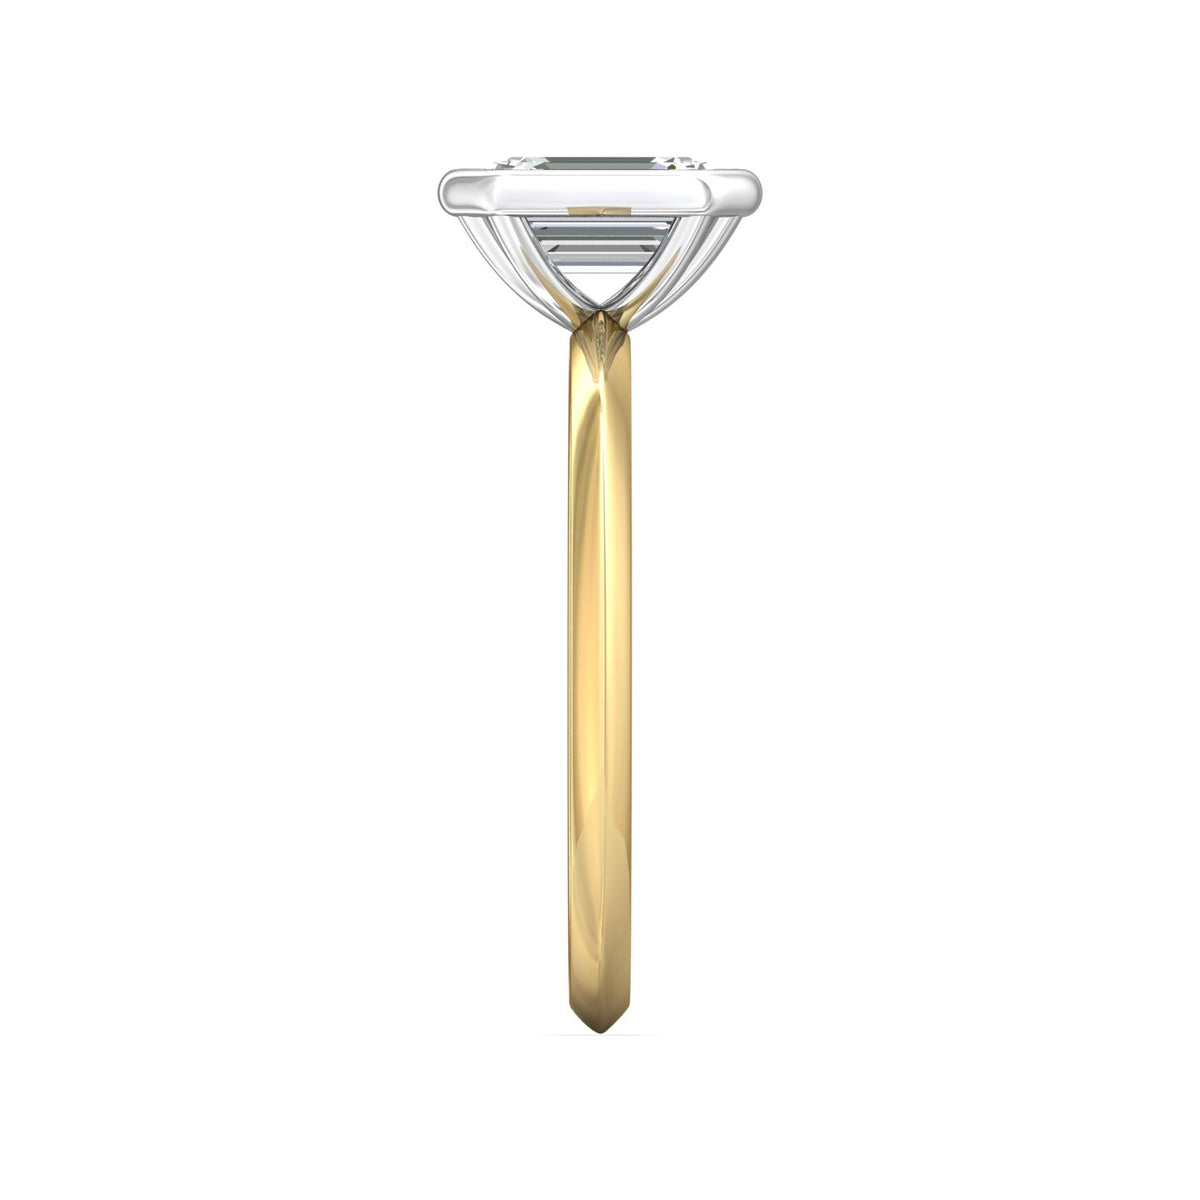 18K Two-Tone Emerald Cut Diamond Engagement Ring